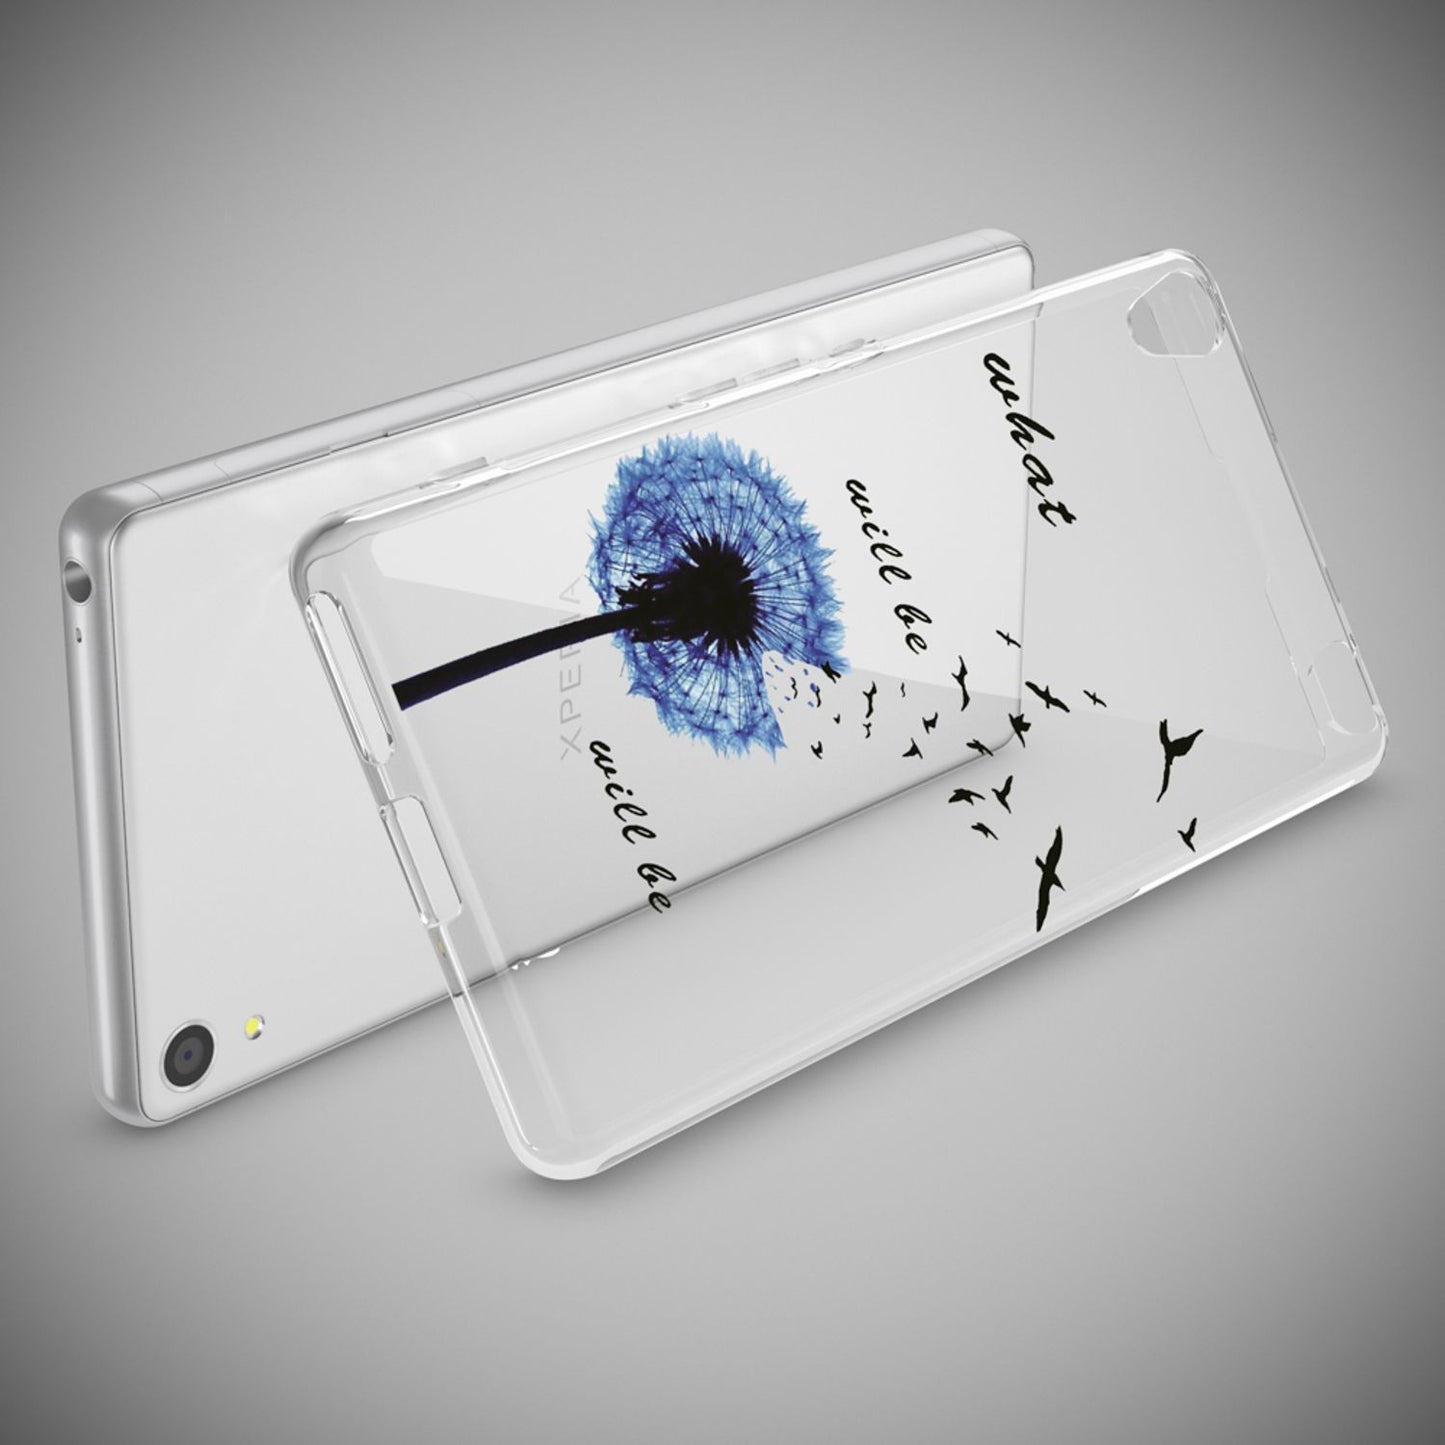 Sony Xperia XA Handy Hülle von NALIA, Silikon Case TPU Motiv Case Schutz Bumper